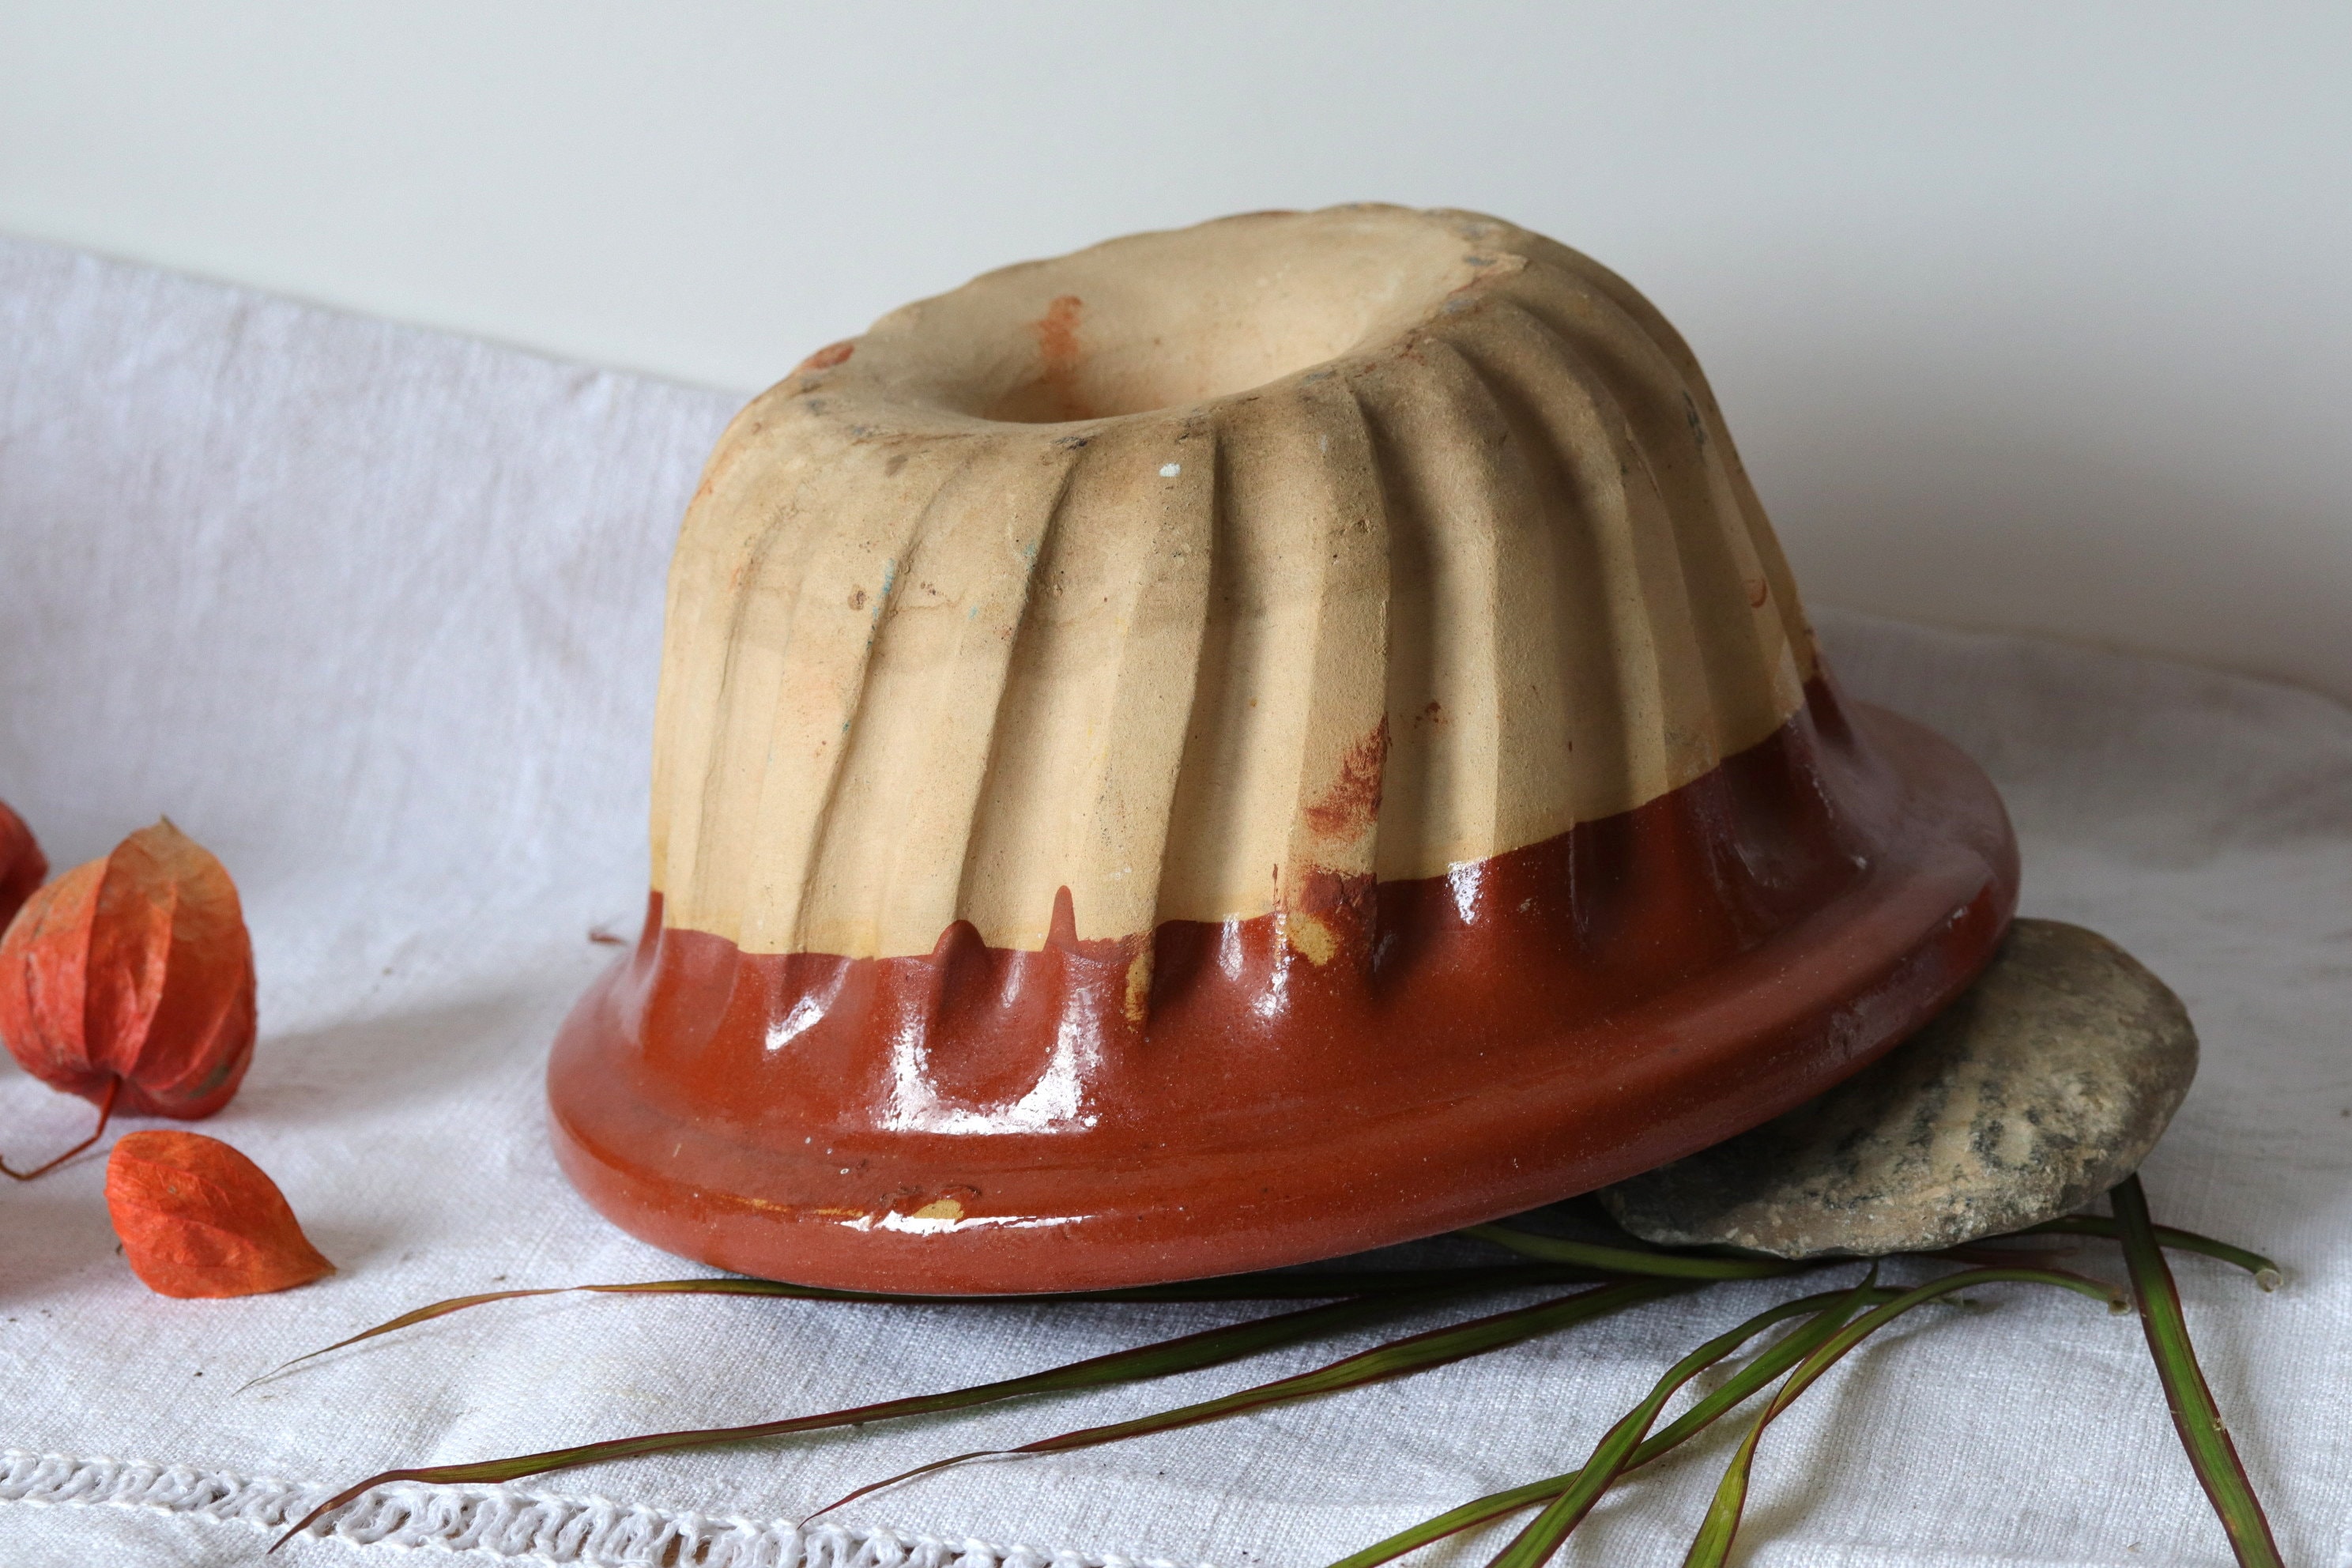 Français Antique Terracota Cake Mold, Brown Glazed Ceramic Kugelhopf 1930S Baking Pan, Rustic, Retro